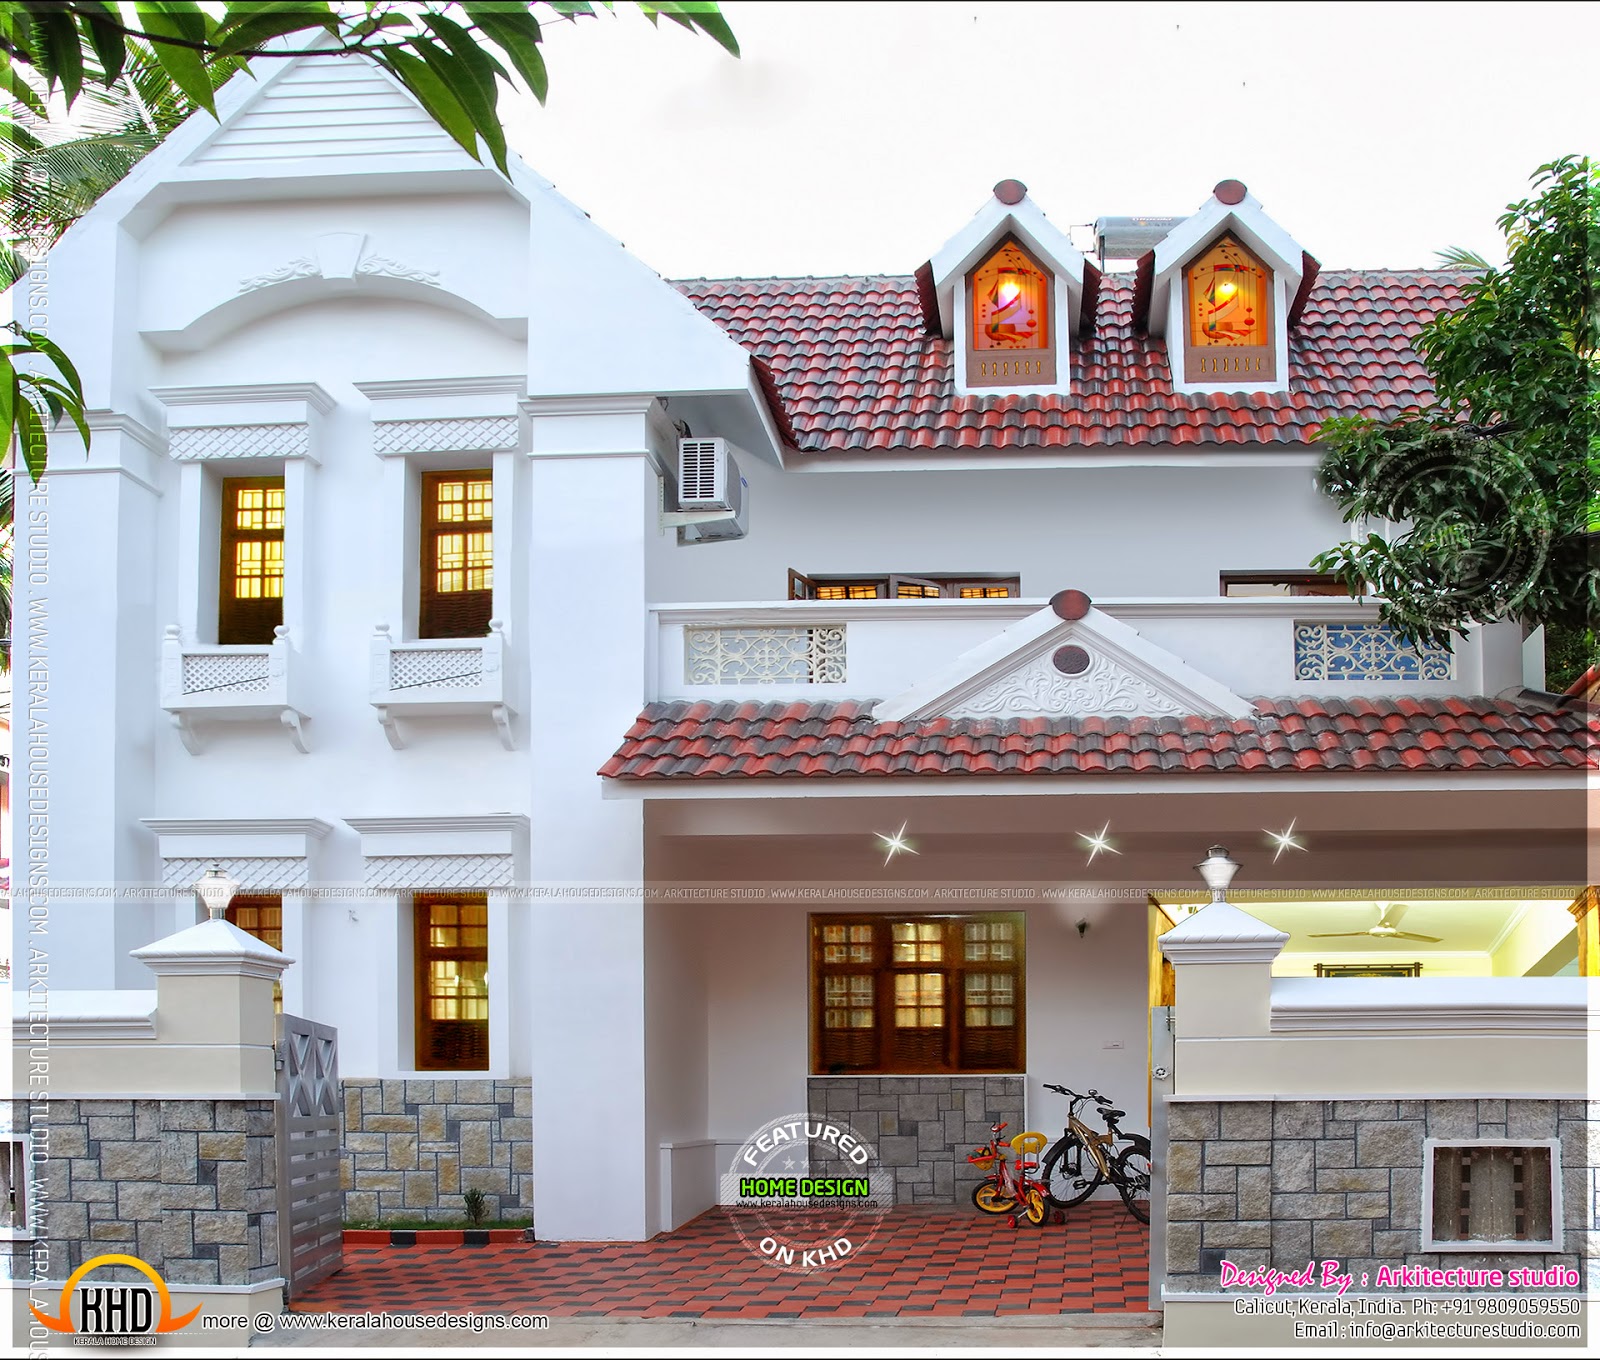  Real  house  in Kerala with interior photos  Kerala home  